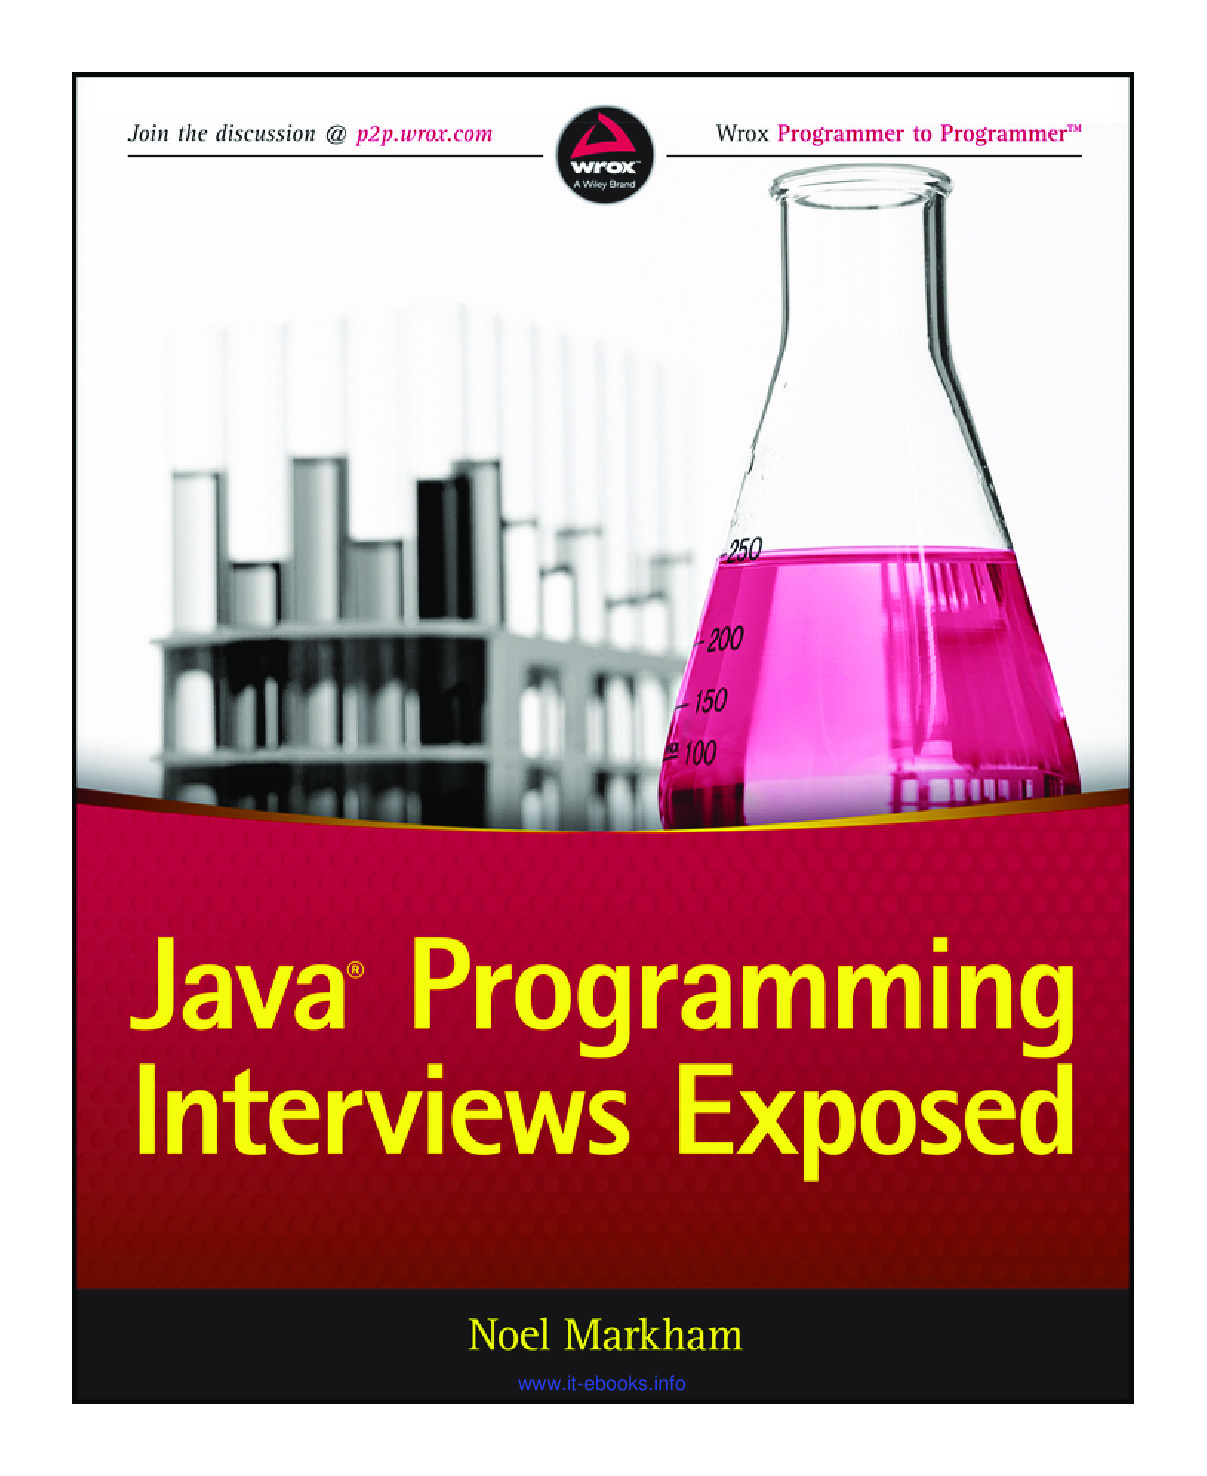 [JAVA][Java Programming Interviews Exposed]